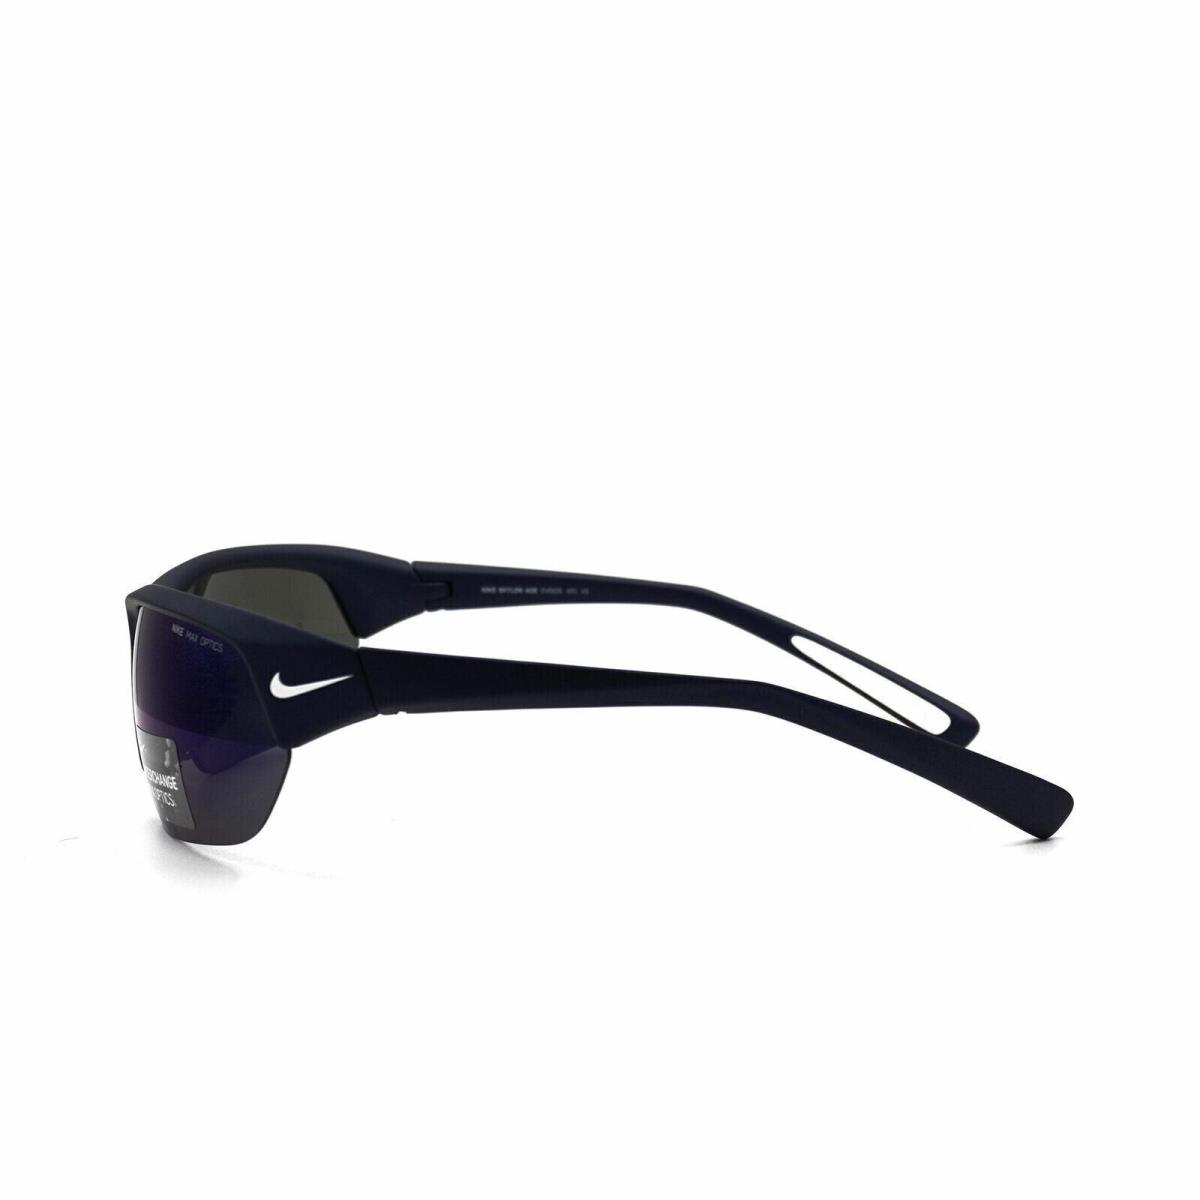 EV0525-401 Mens Nike Skylon Ace Wrap Sunglasses Navy Blue Blue Lens - Frame: Navy Blue, Lens: Blue